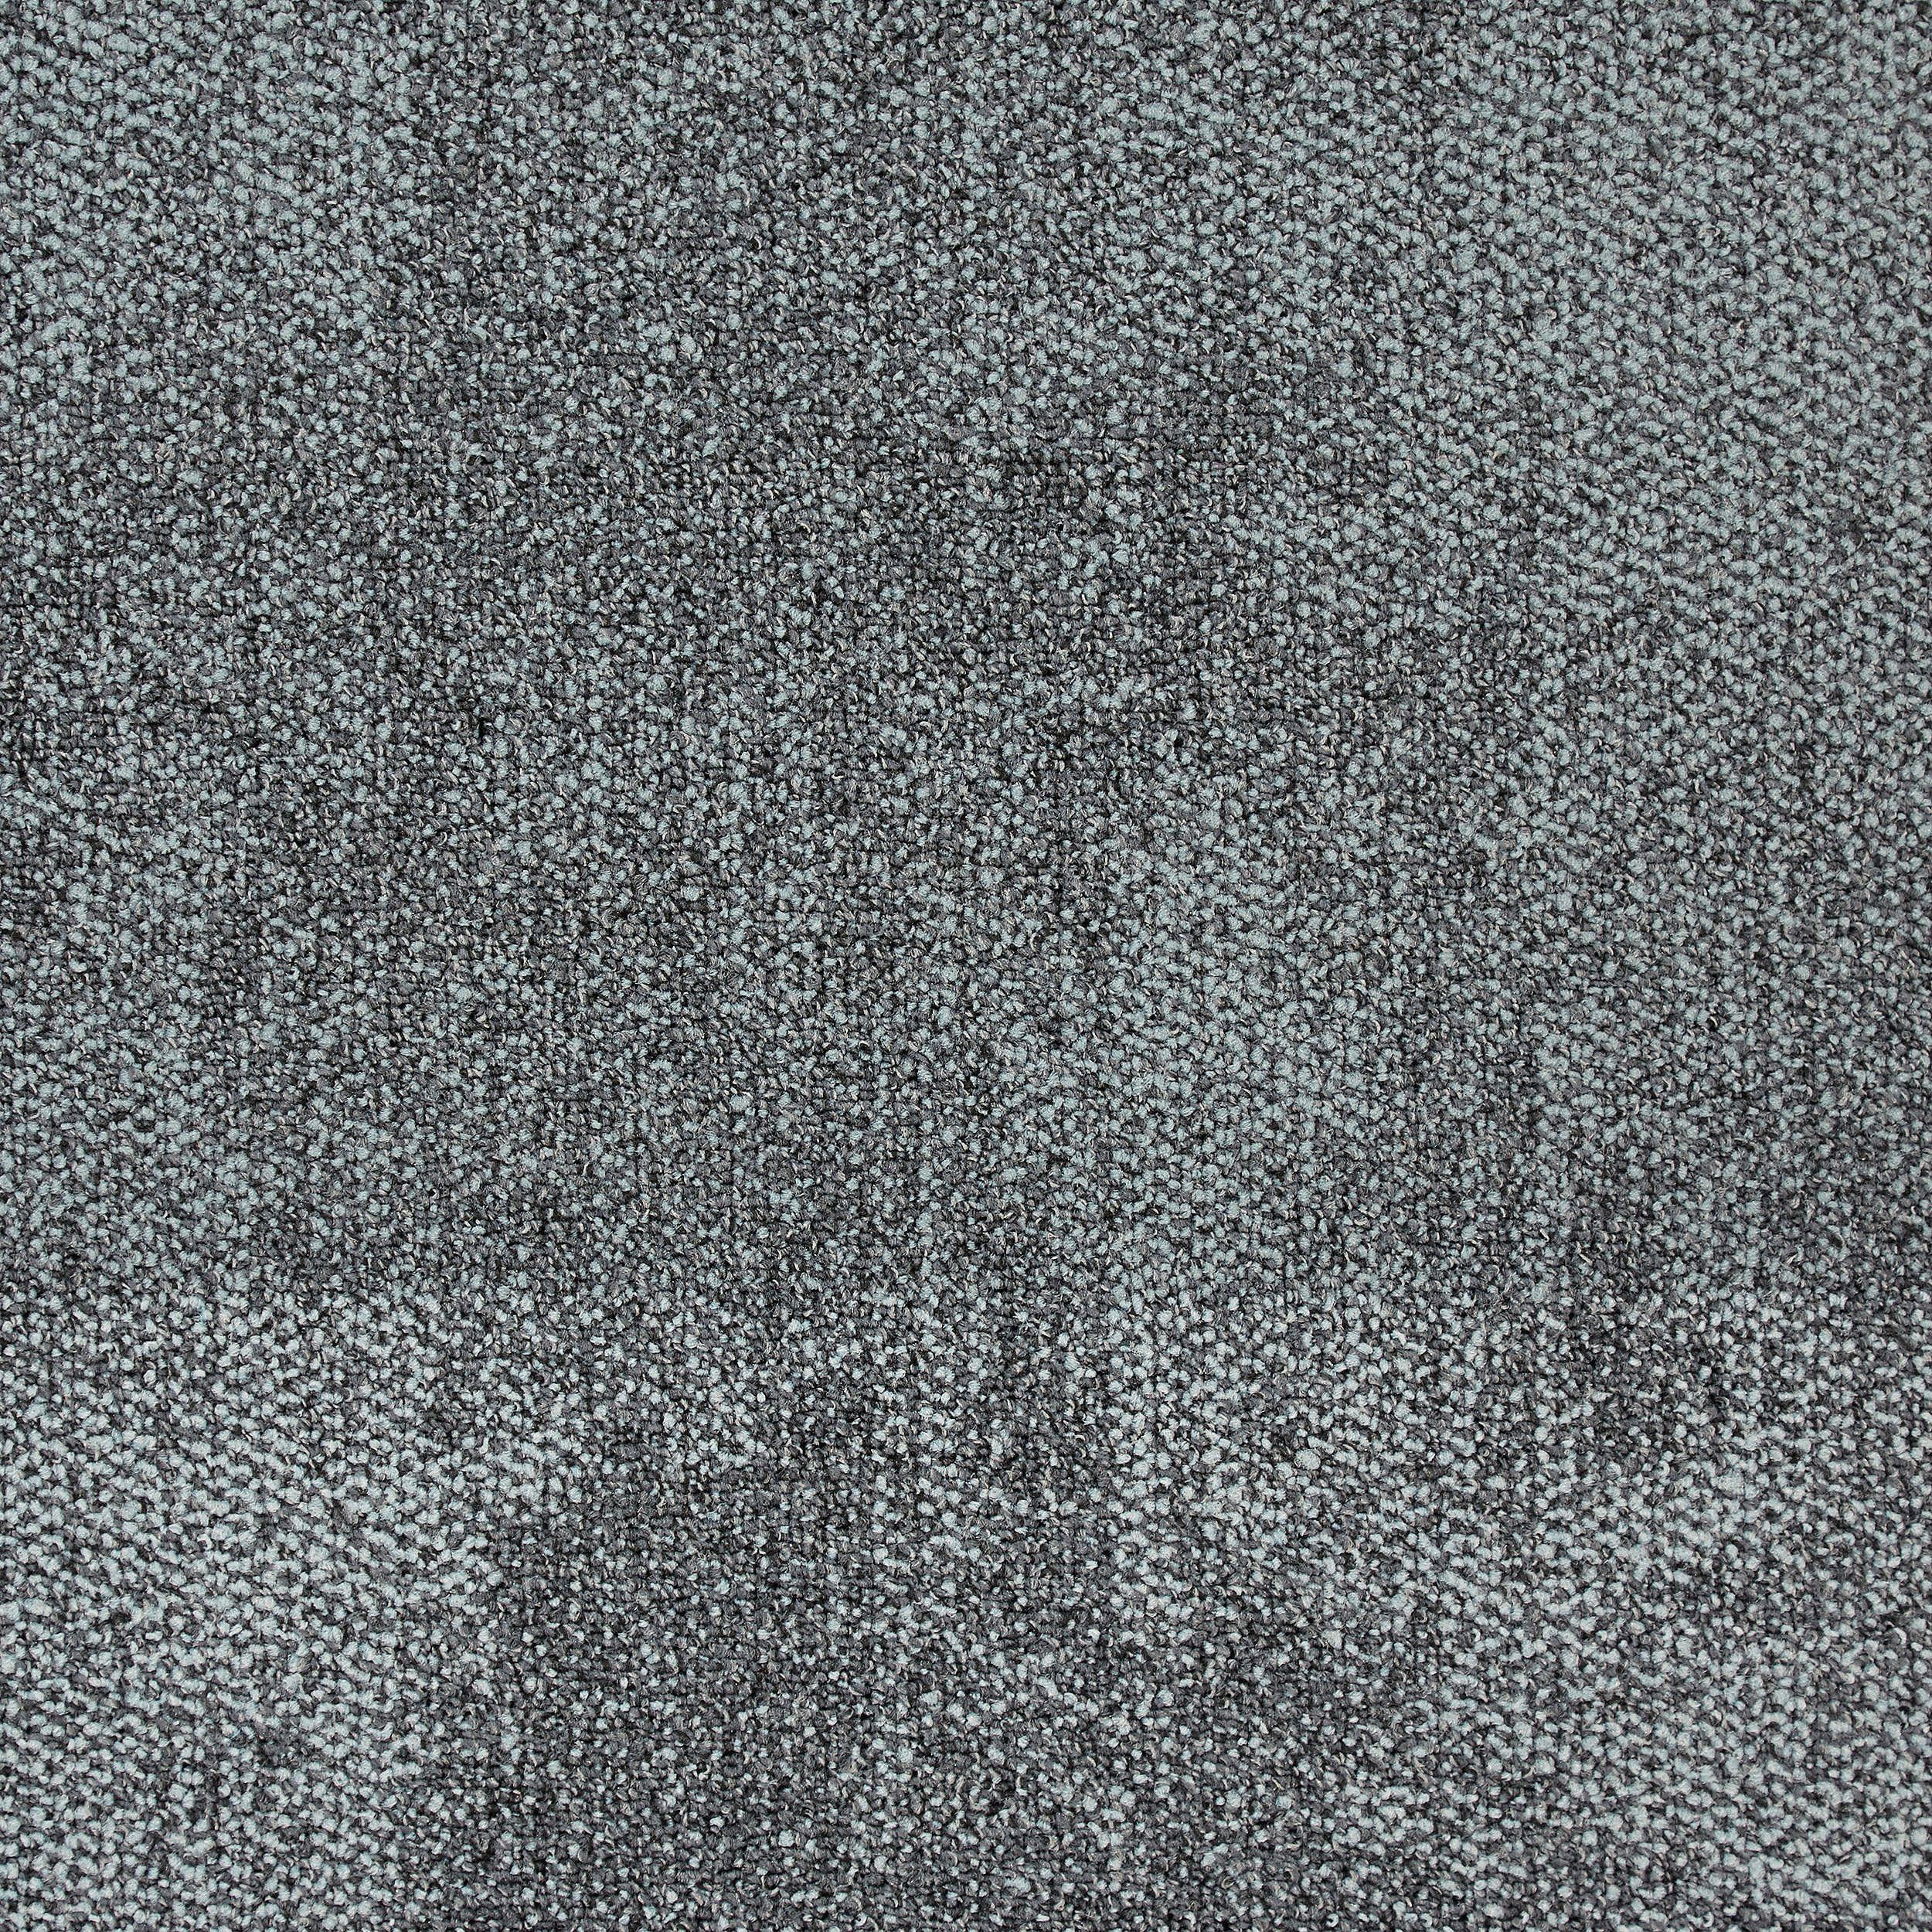 Composure Carpet Tile In Reserved número de imagen 7